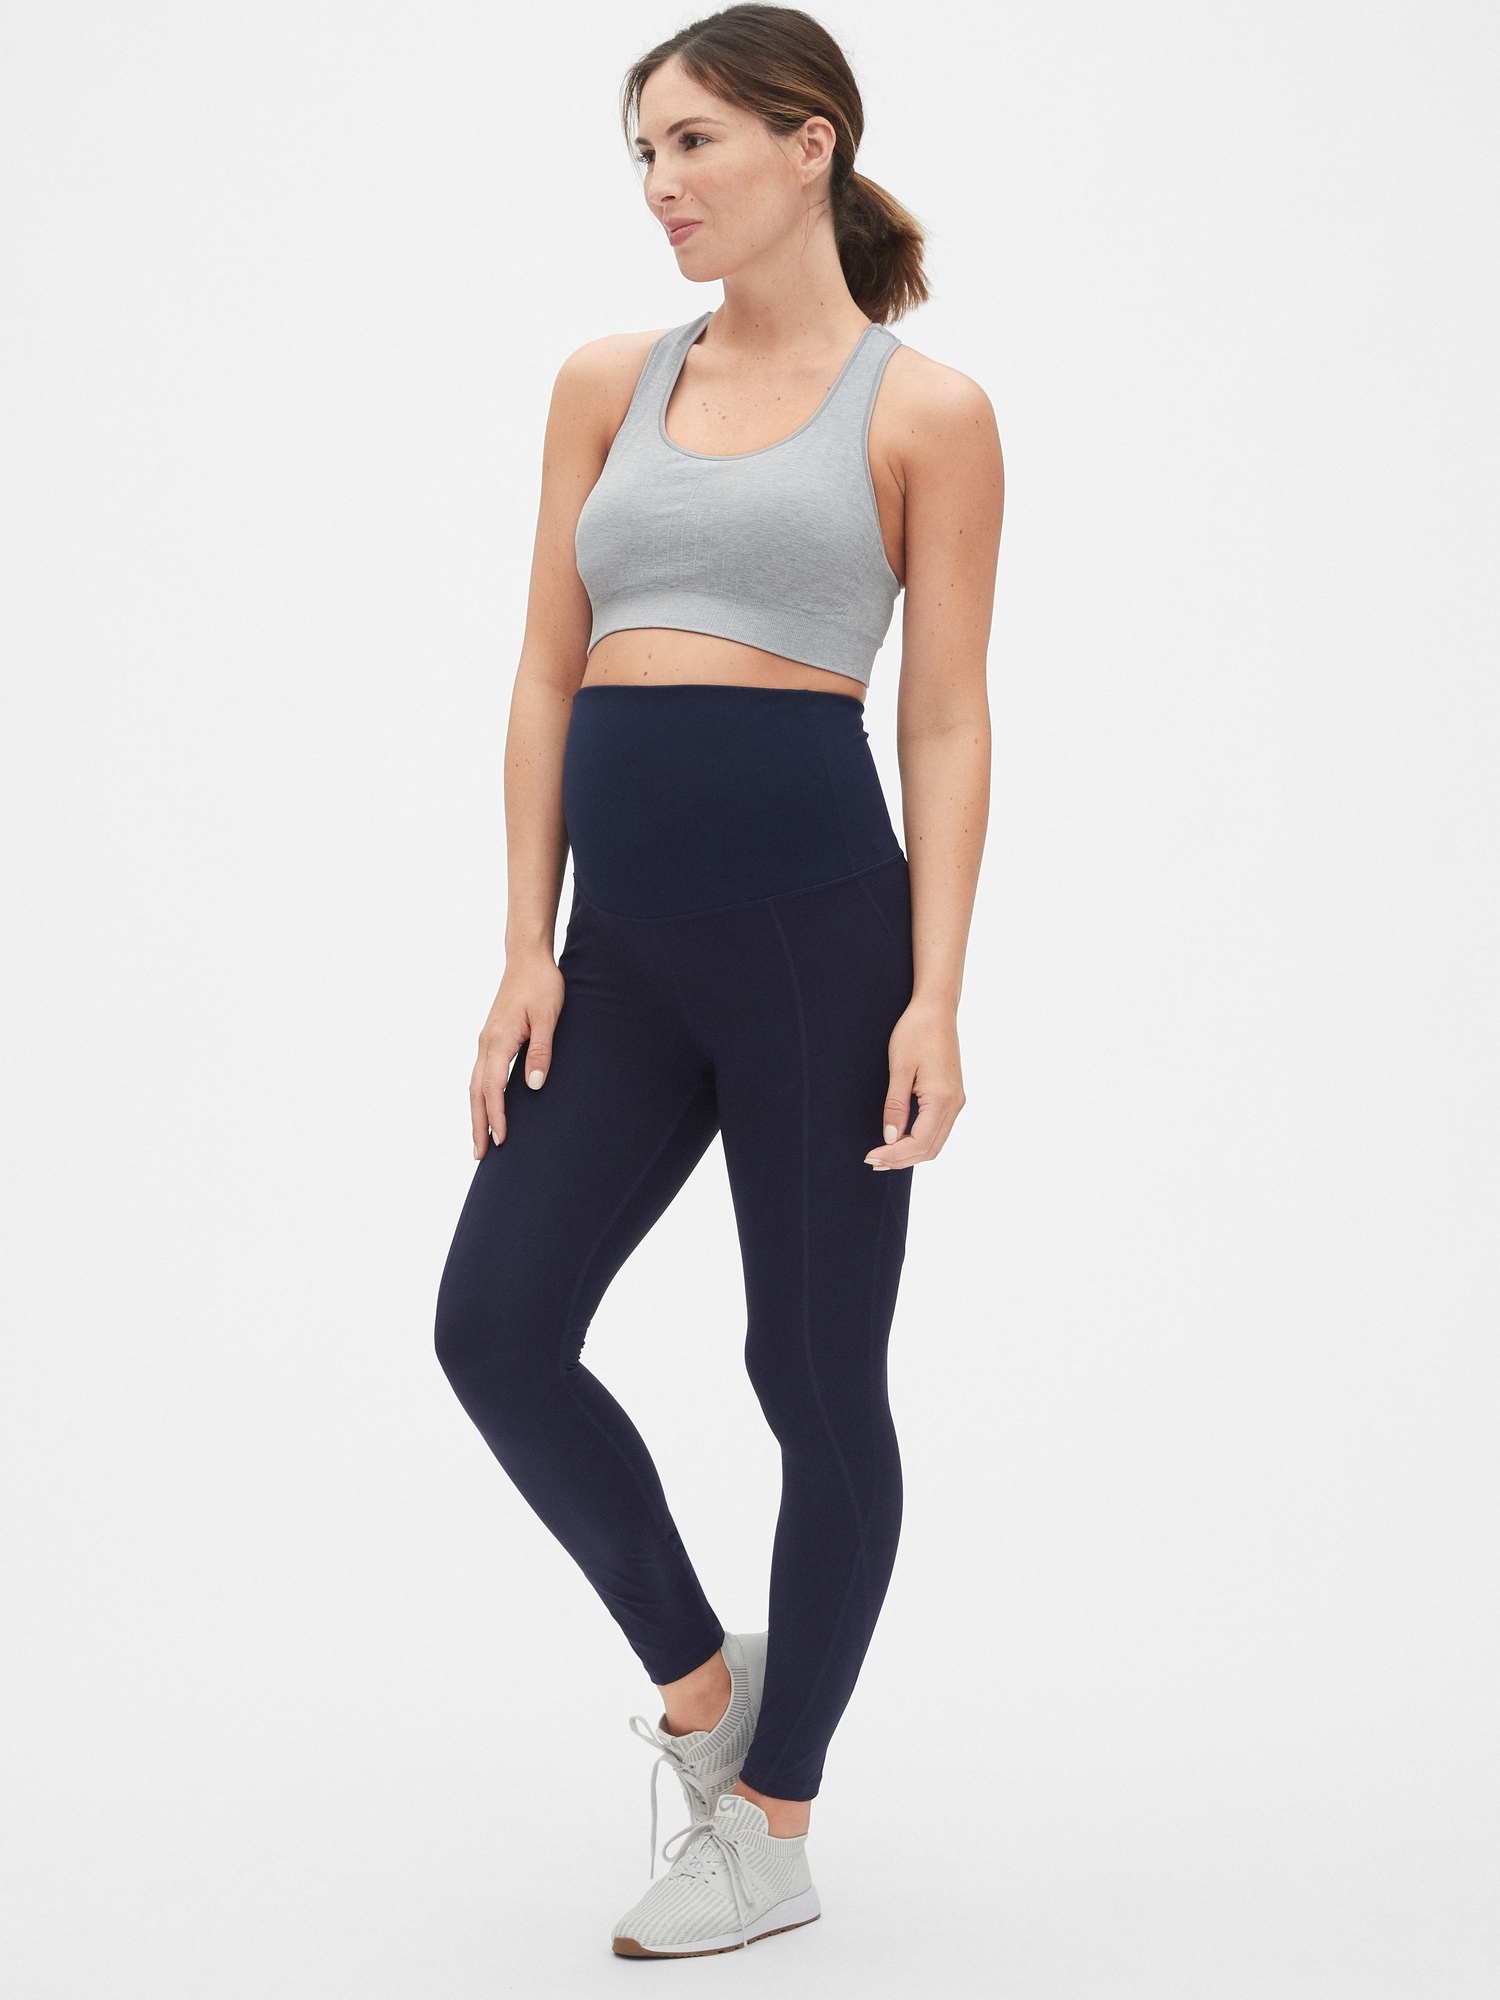 NWT GAP Women's GapFit GDry Yoga Workout Pants Capri Length Leggings  Wicking *W4 | eBay